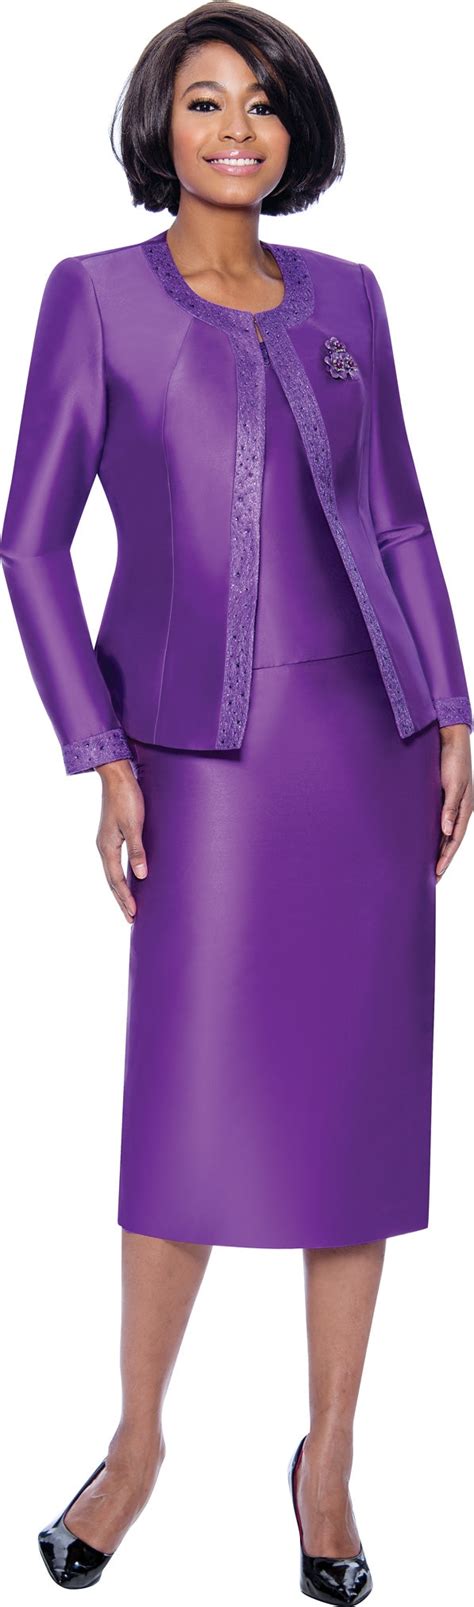 Terramina Suit 7637 Purple Church Suits For Less